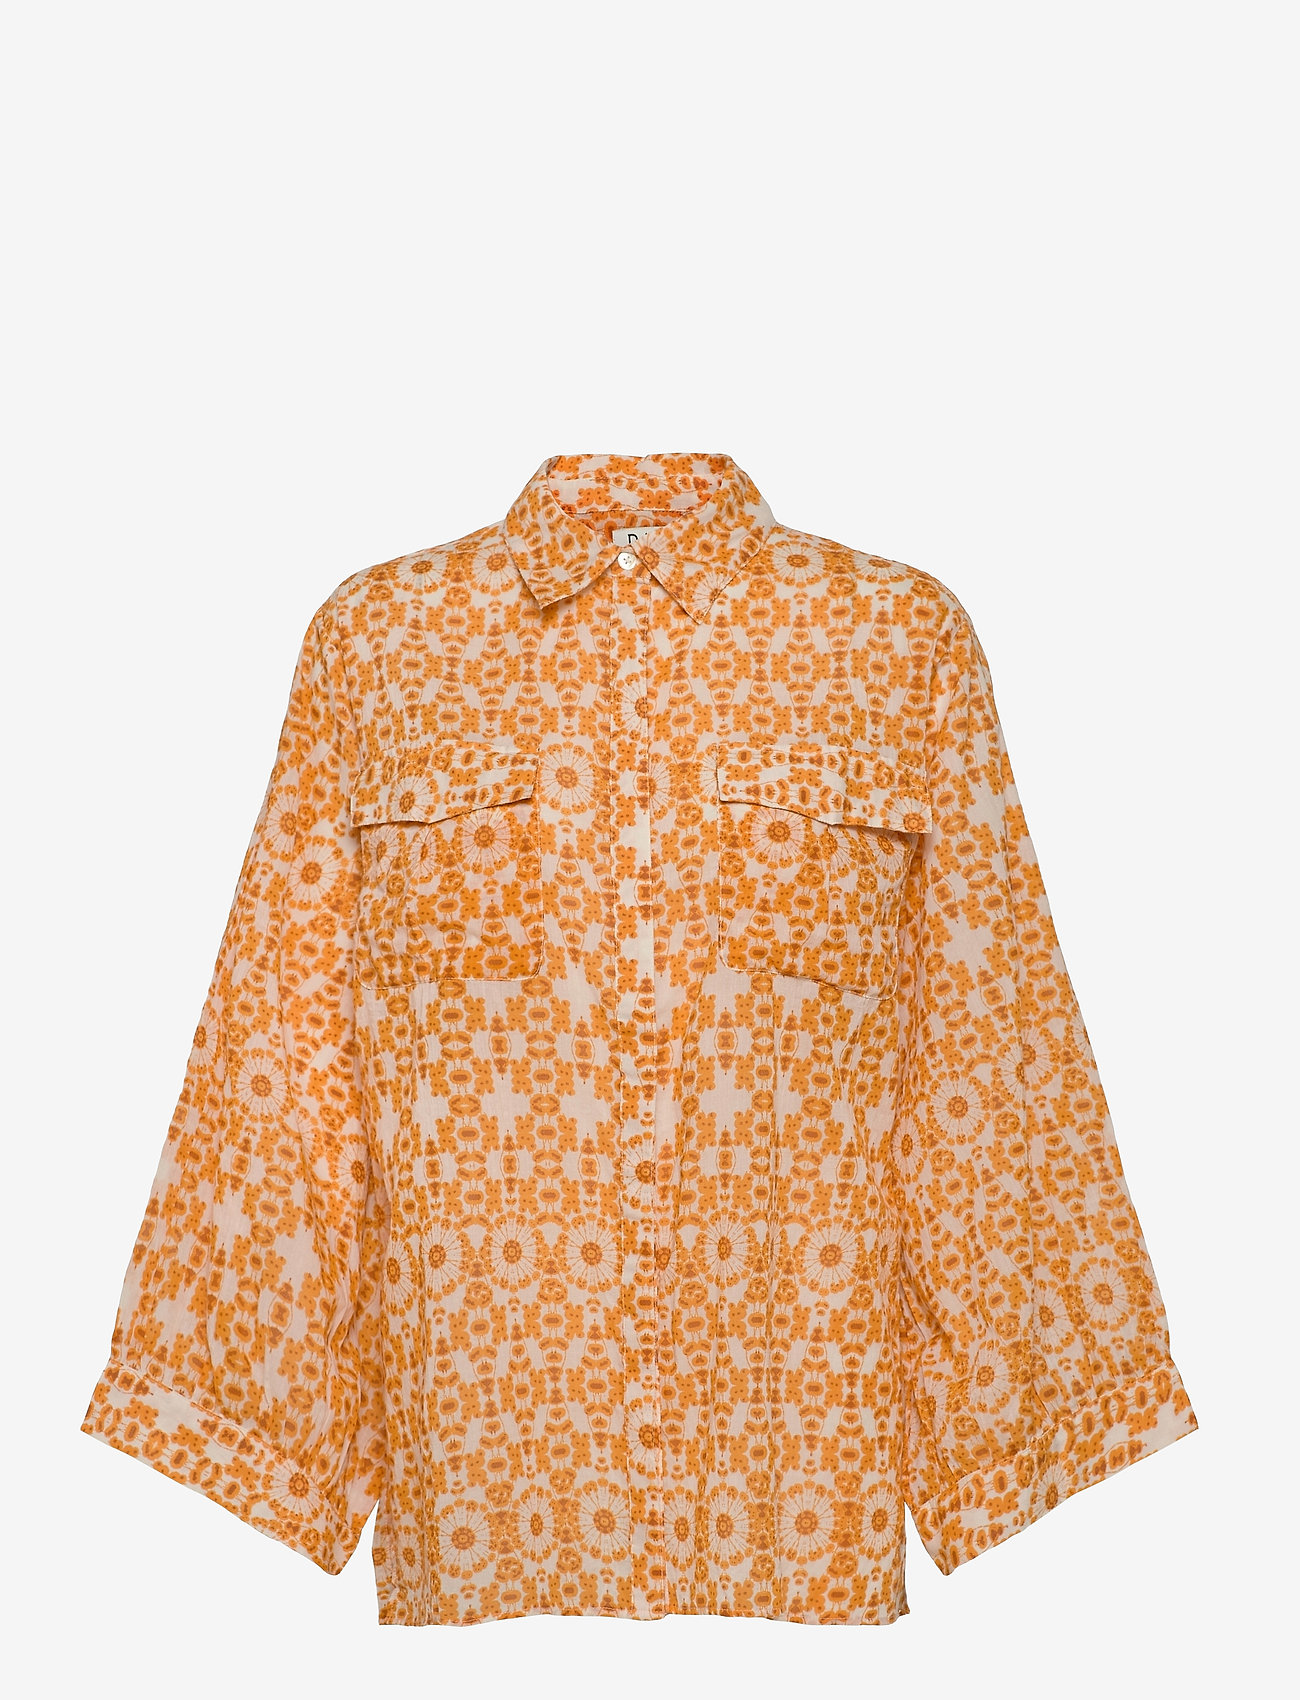 Day Birger et Mikkelsen - DAY Radiate - langærmede skjorter - apricot - 0